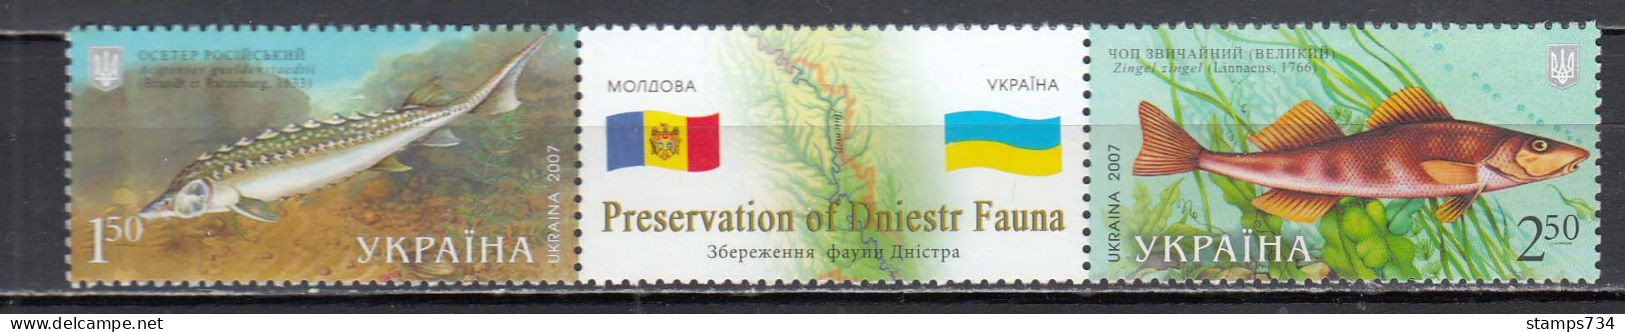 Ukraina 2007 - Fishes, Joint Issue With Moldova, Mi-Nr. 894/95, MNH** - Ucrania